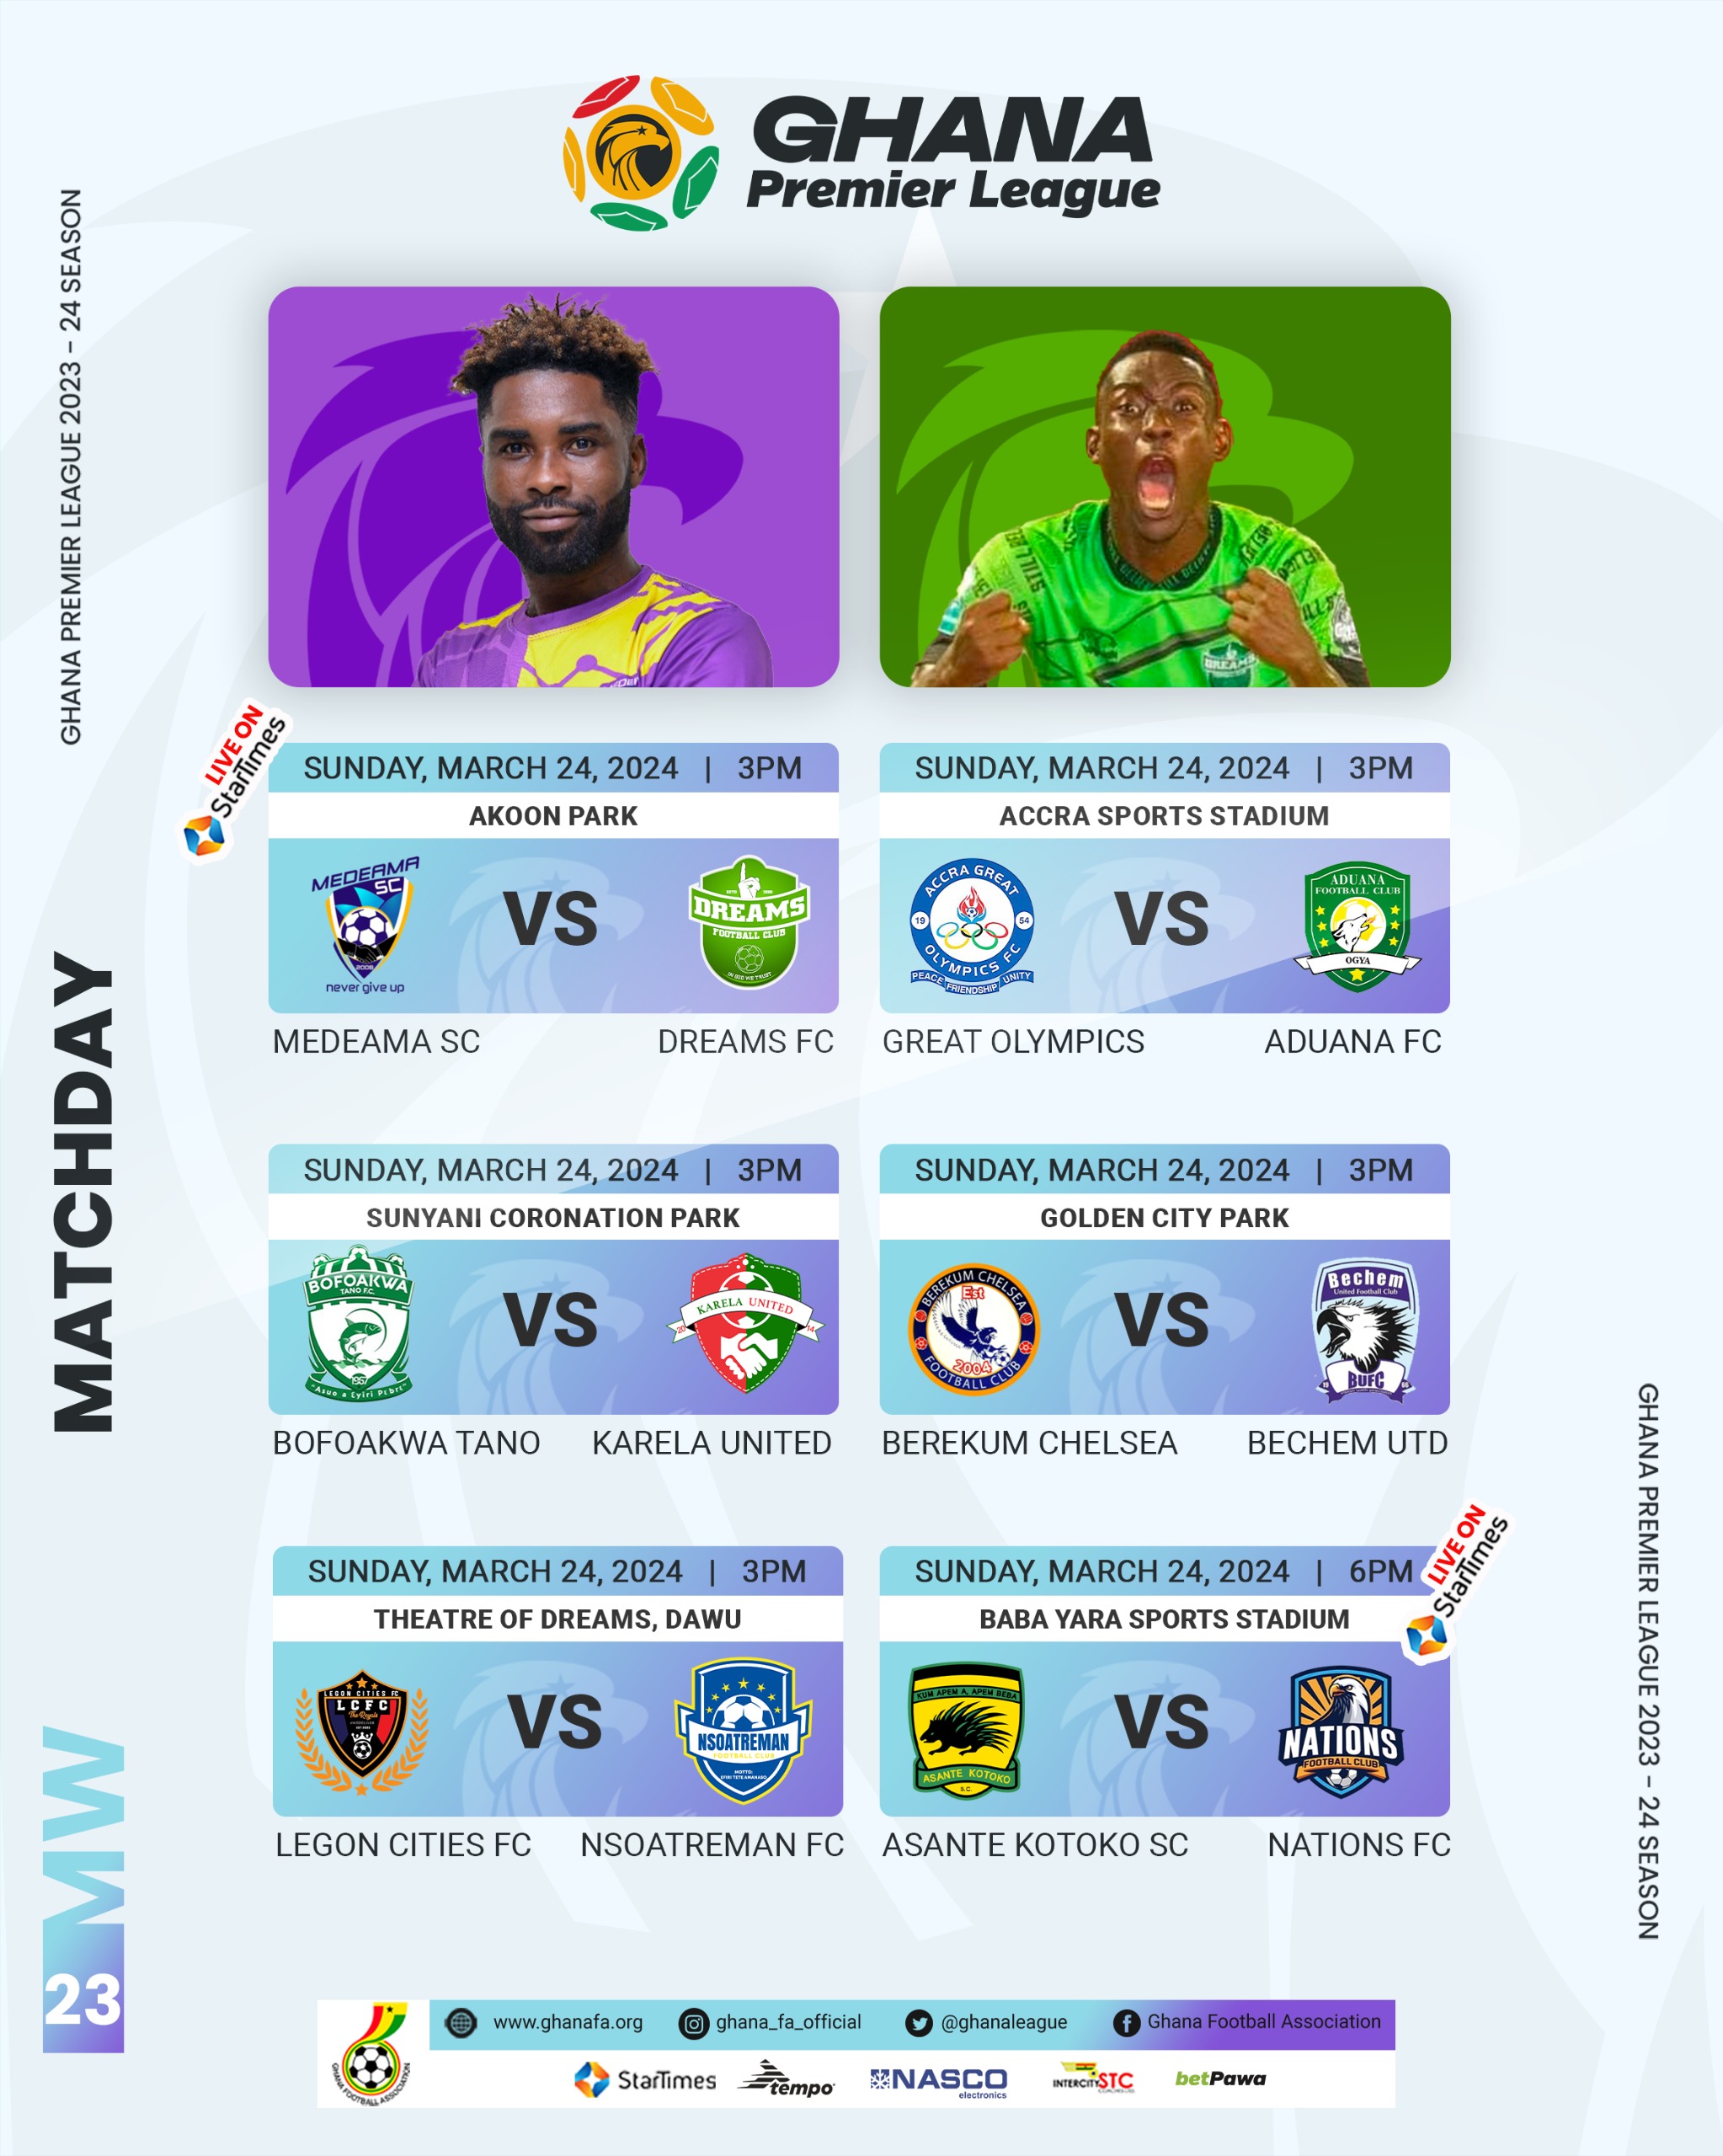 Asante Kotoko battle Nations FC at Baba Yara Stadium on Sunday